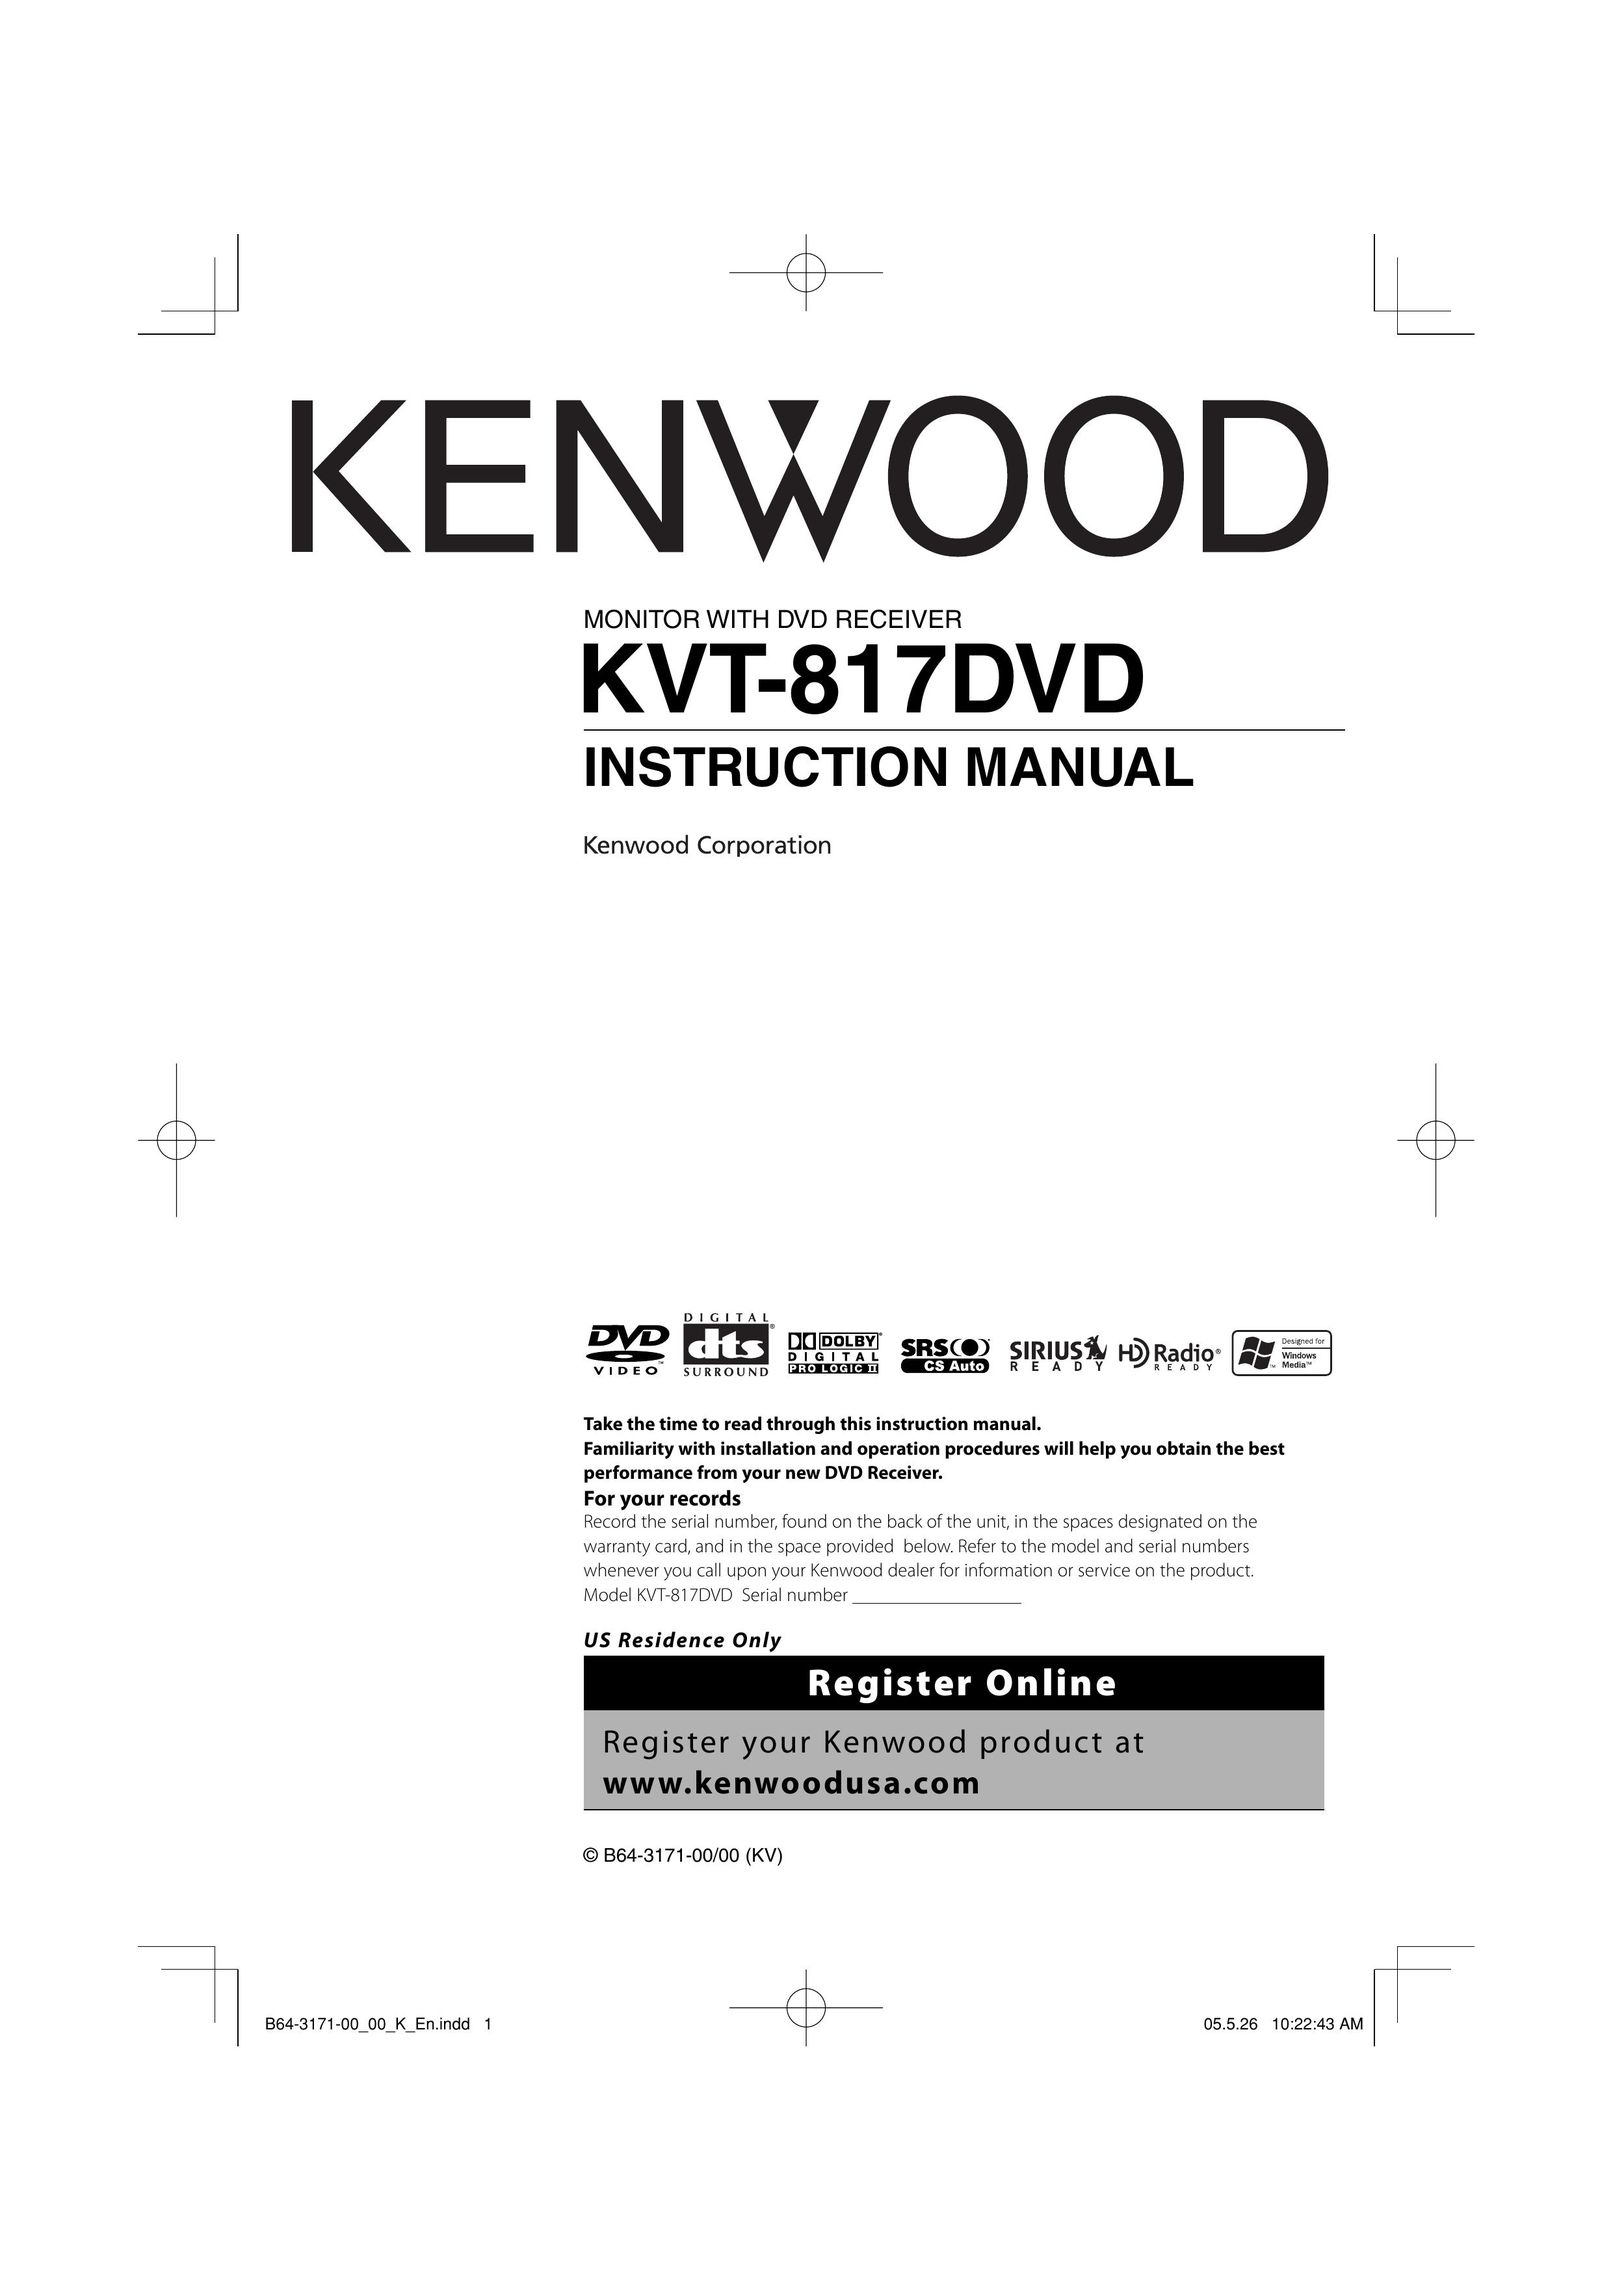 Kenwood KVT-817DVD Portable DVD Player User Manual